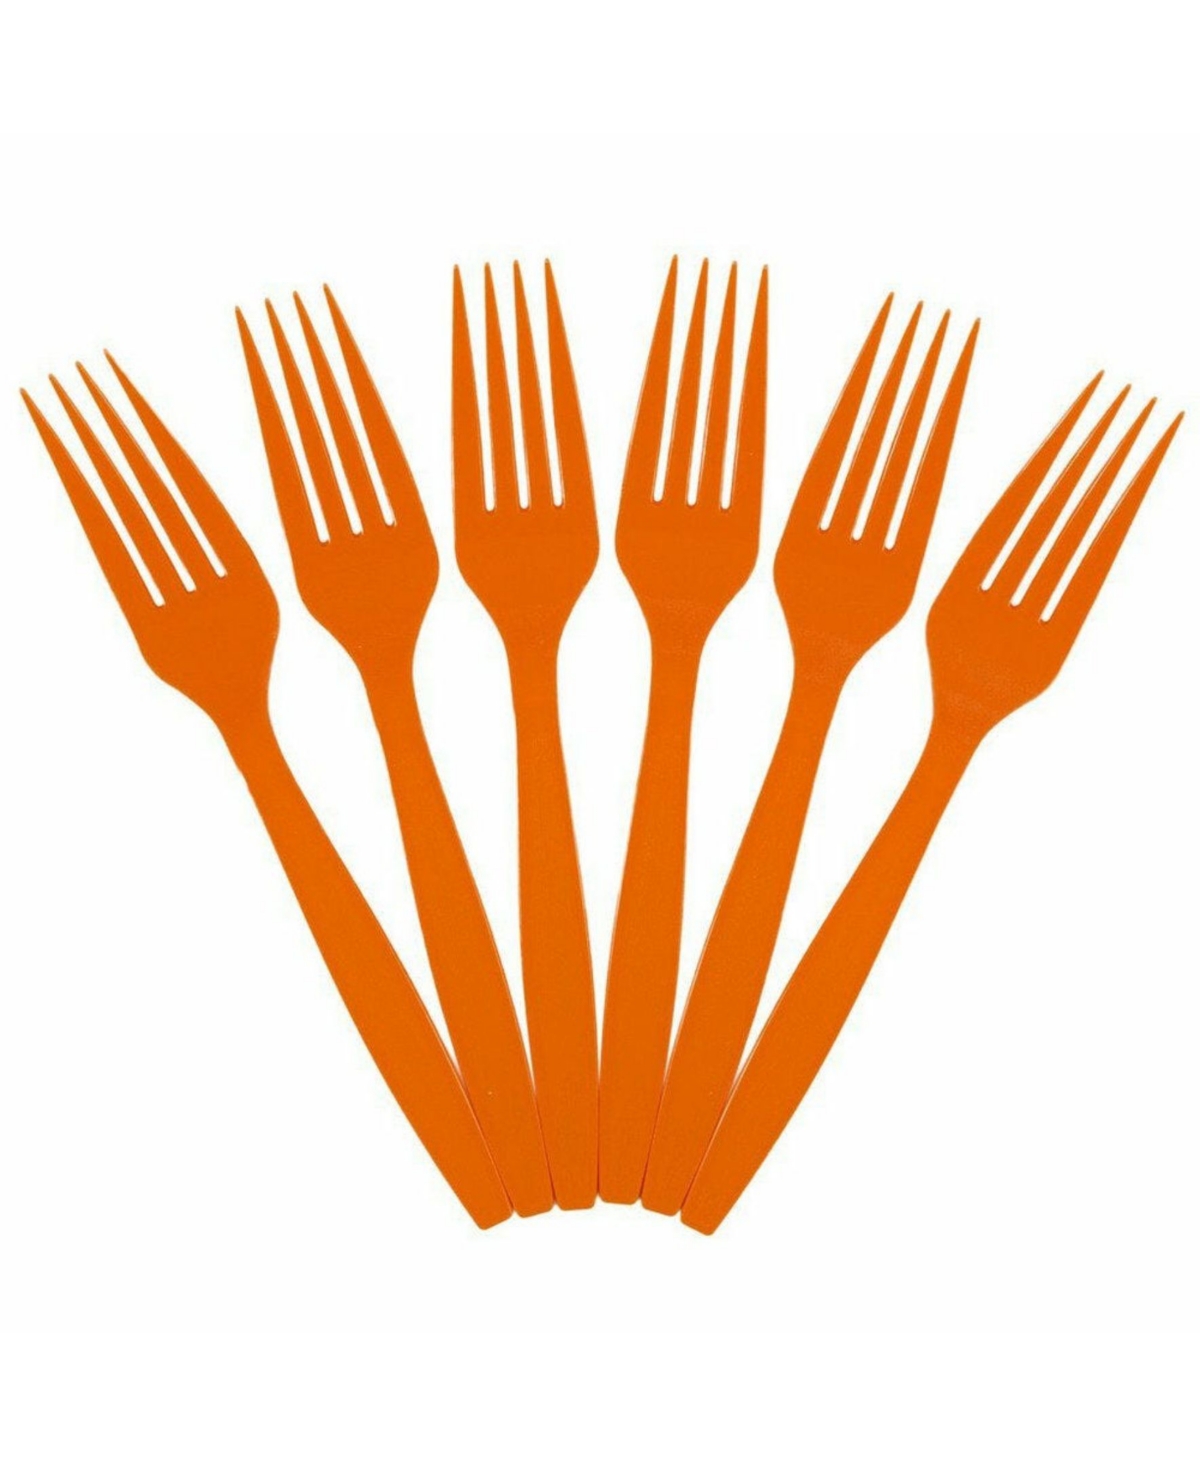 Big Party Pack of Premium Plastic Forks - 100 Disposable Forks Per Box - Orange